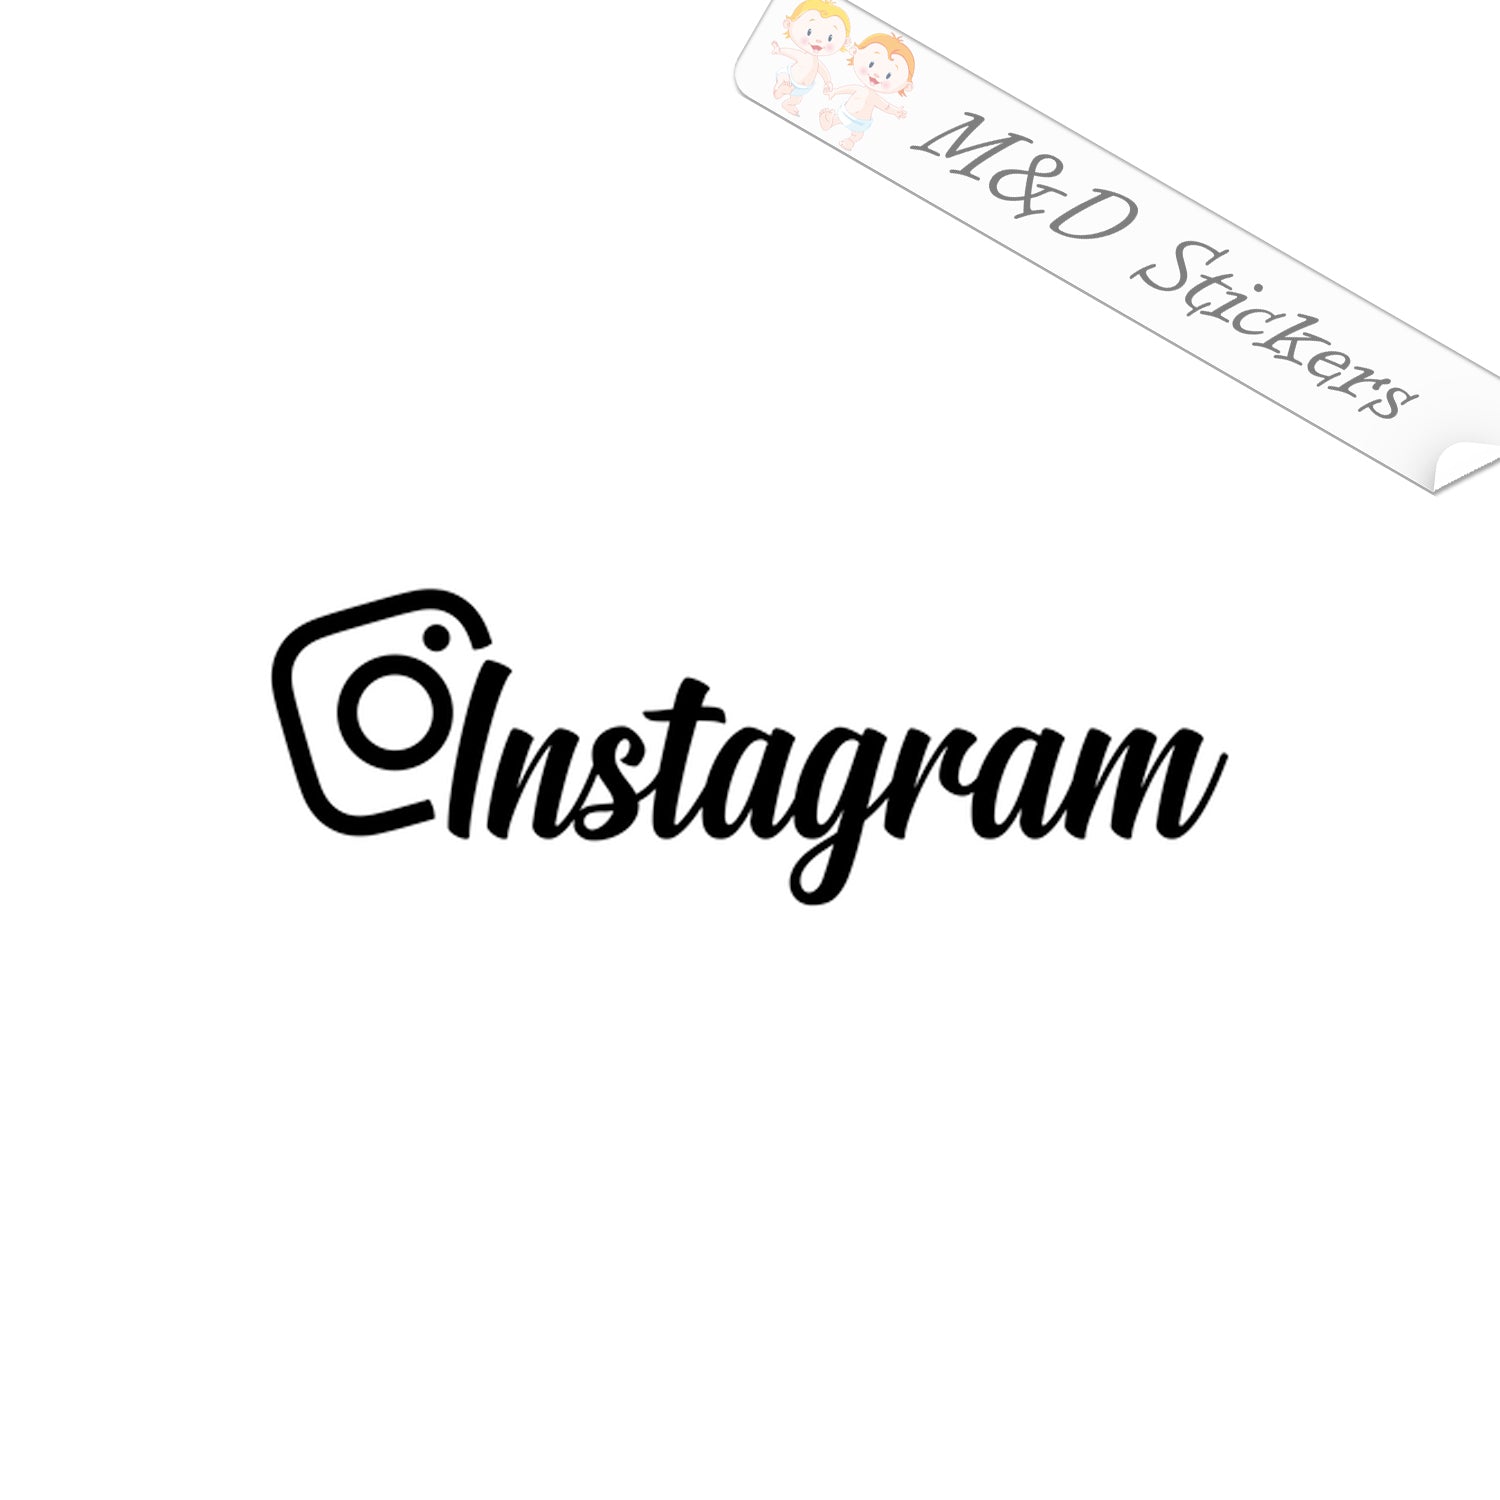 Instagram Logo Black And White Retailers